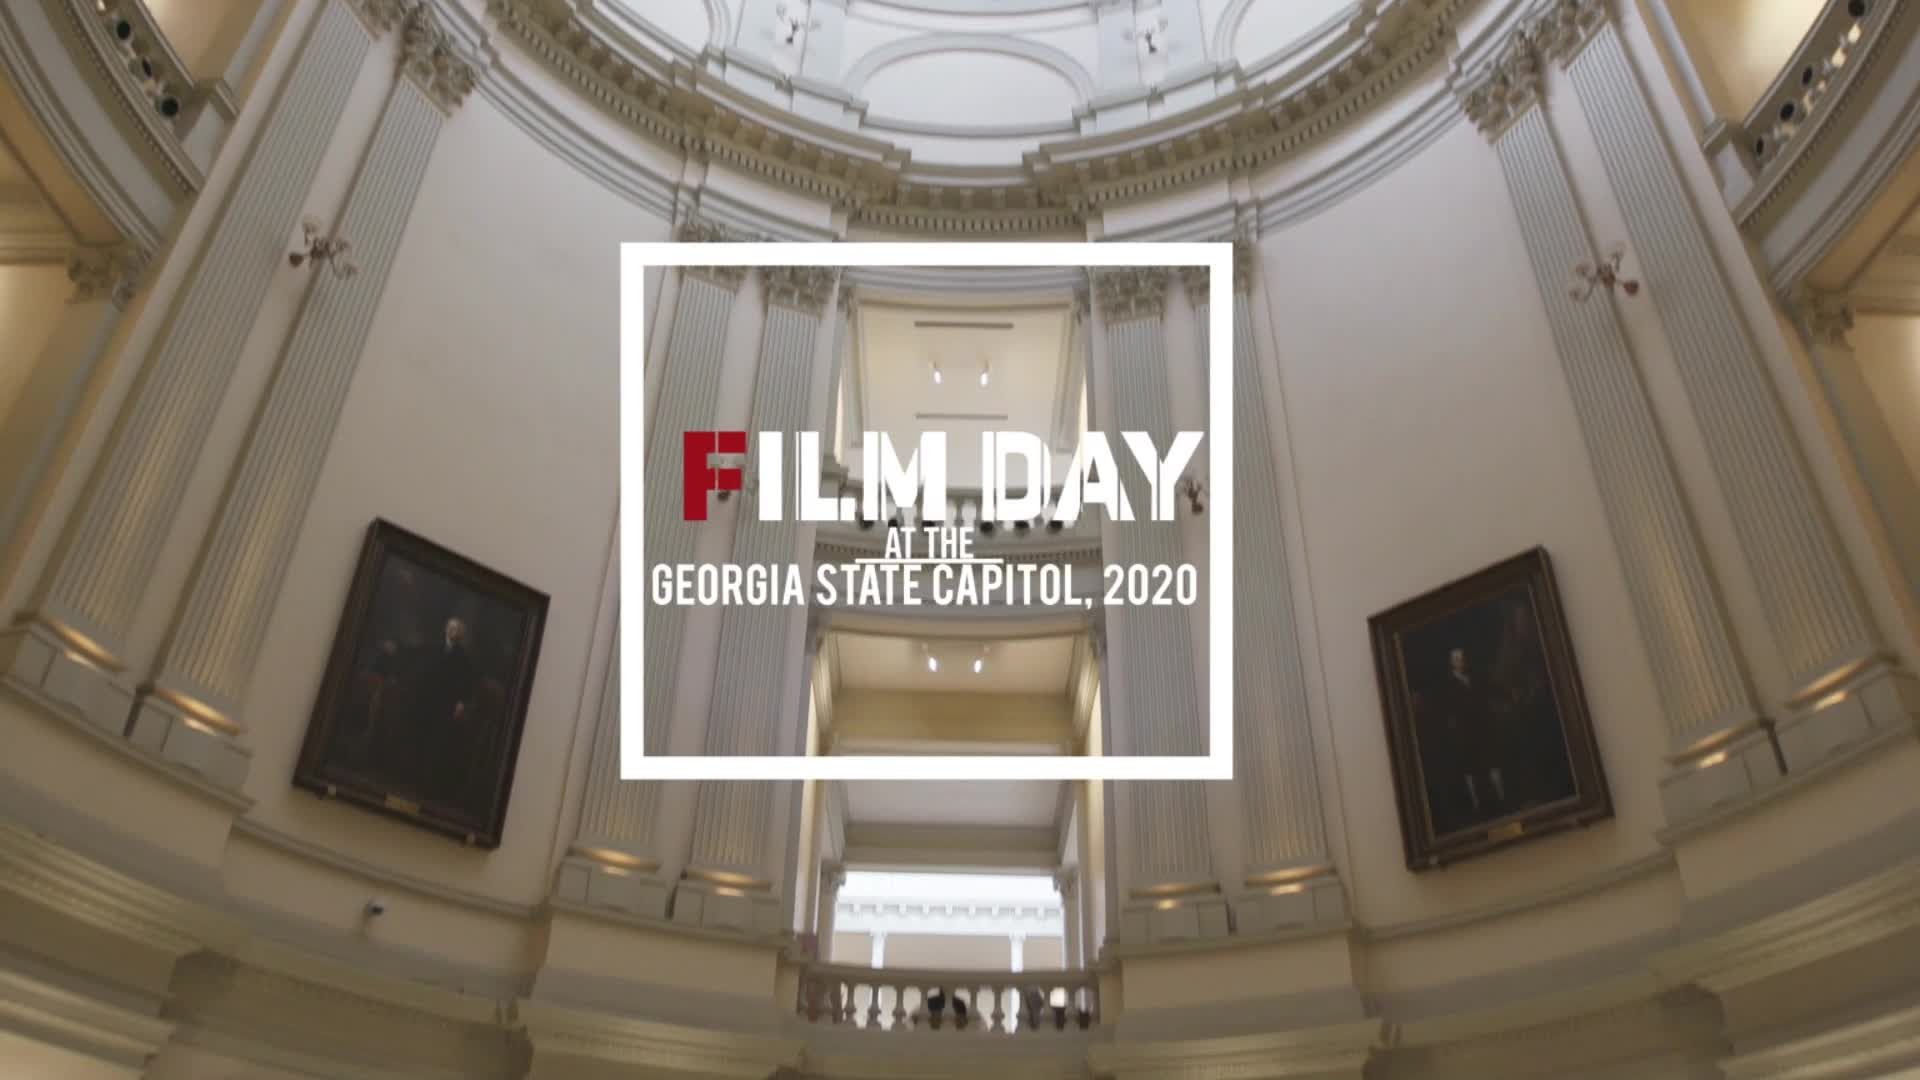 Georgia Film Day at the Georgia State Capitol 2020